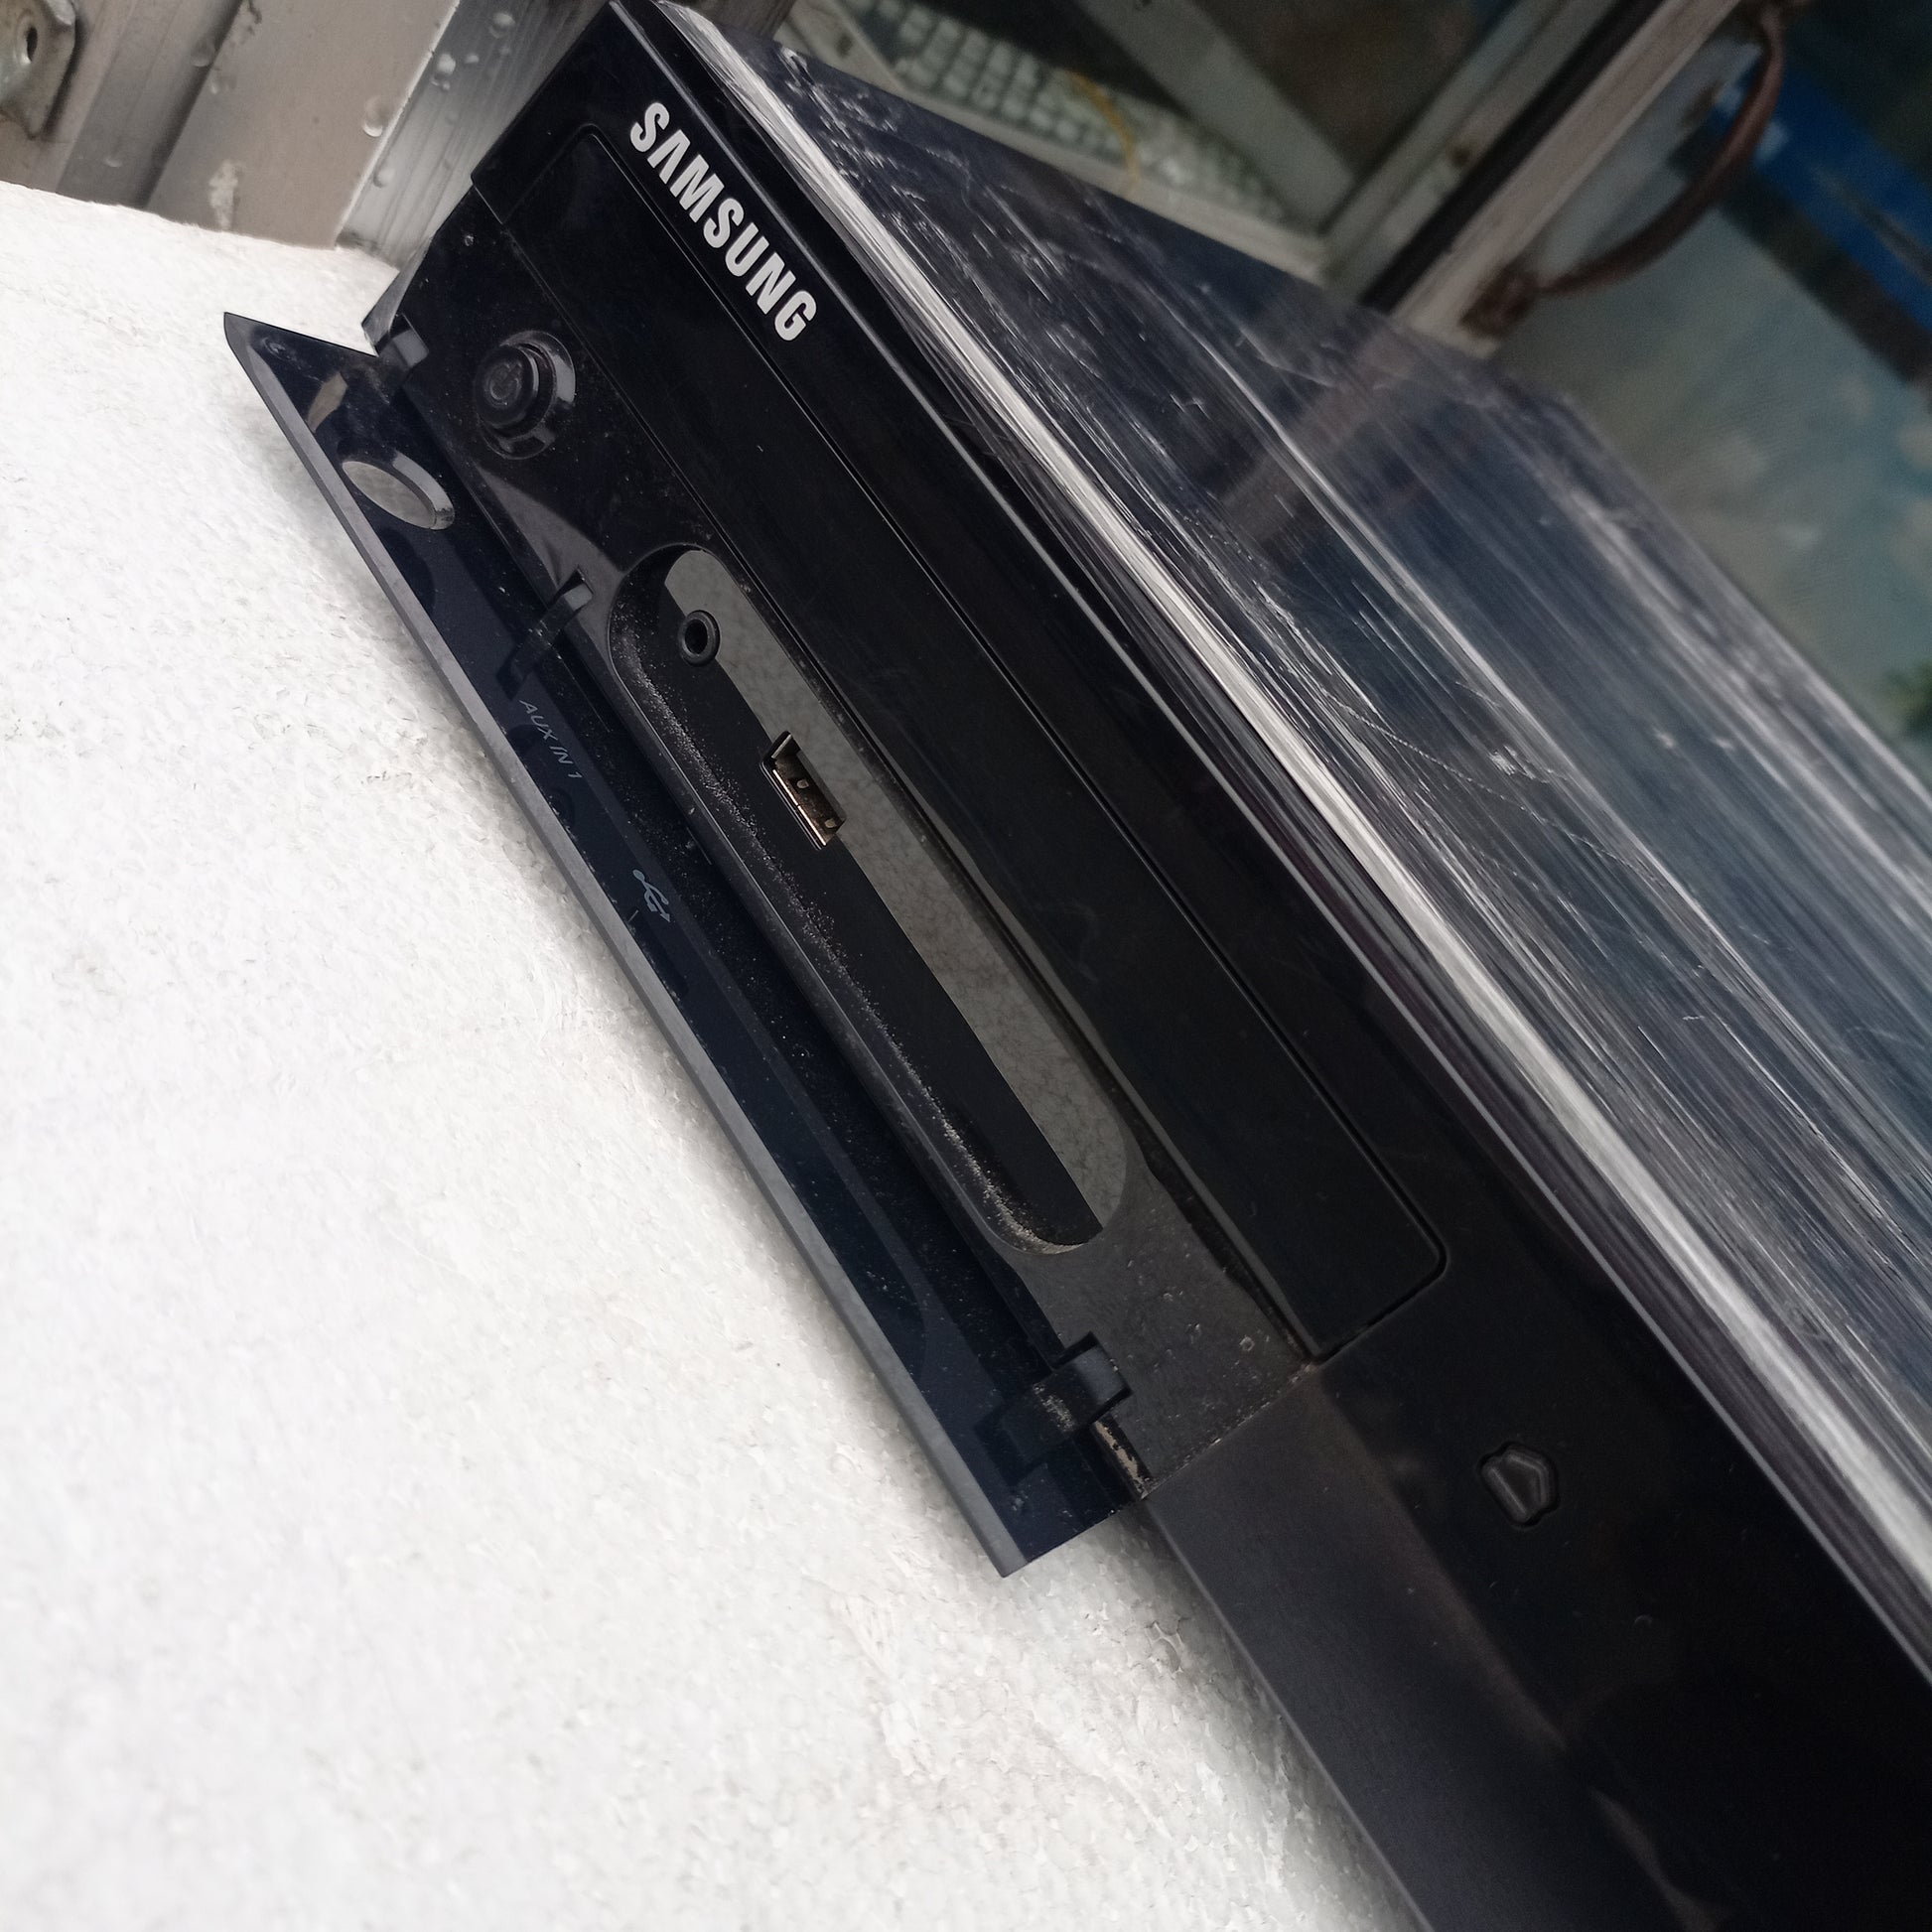 Samsung HT-Z310R 5.1Ch 1000watts Bluetooth DVD Home Theater Machine Head - Open USB tray